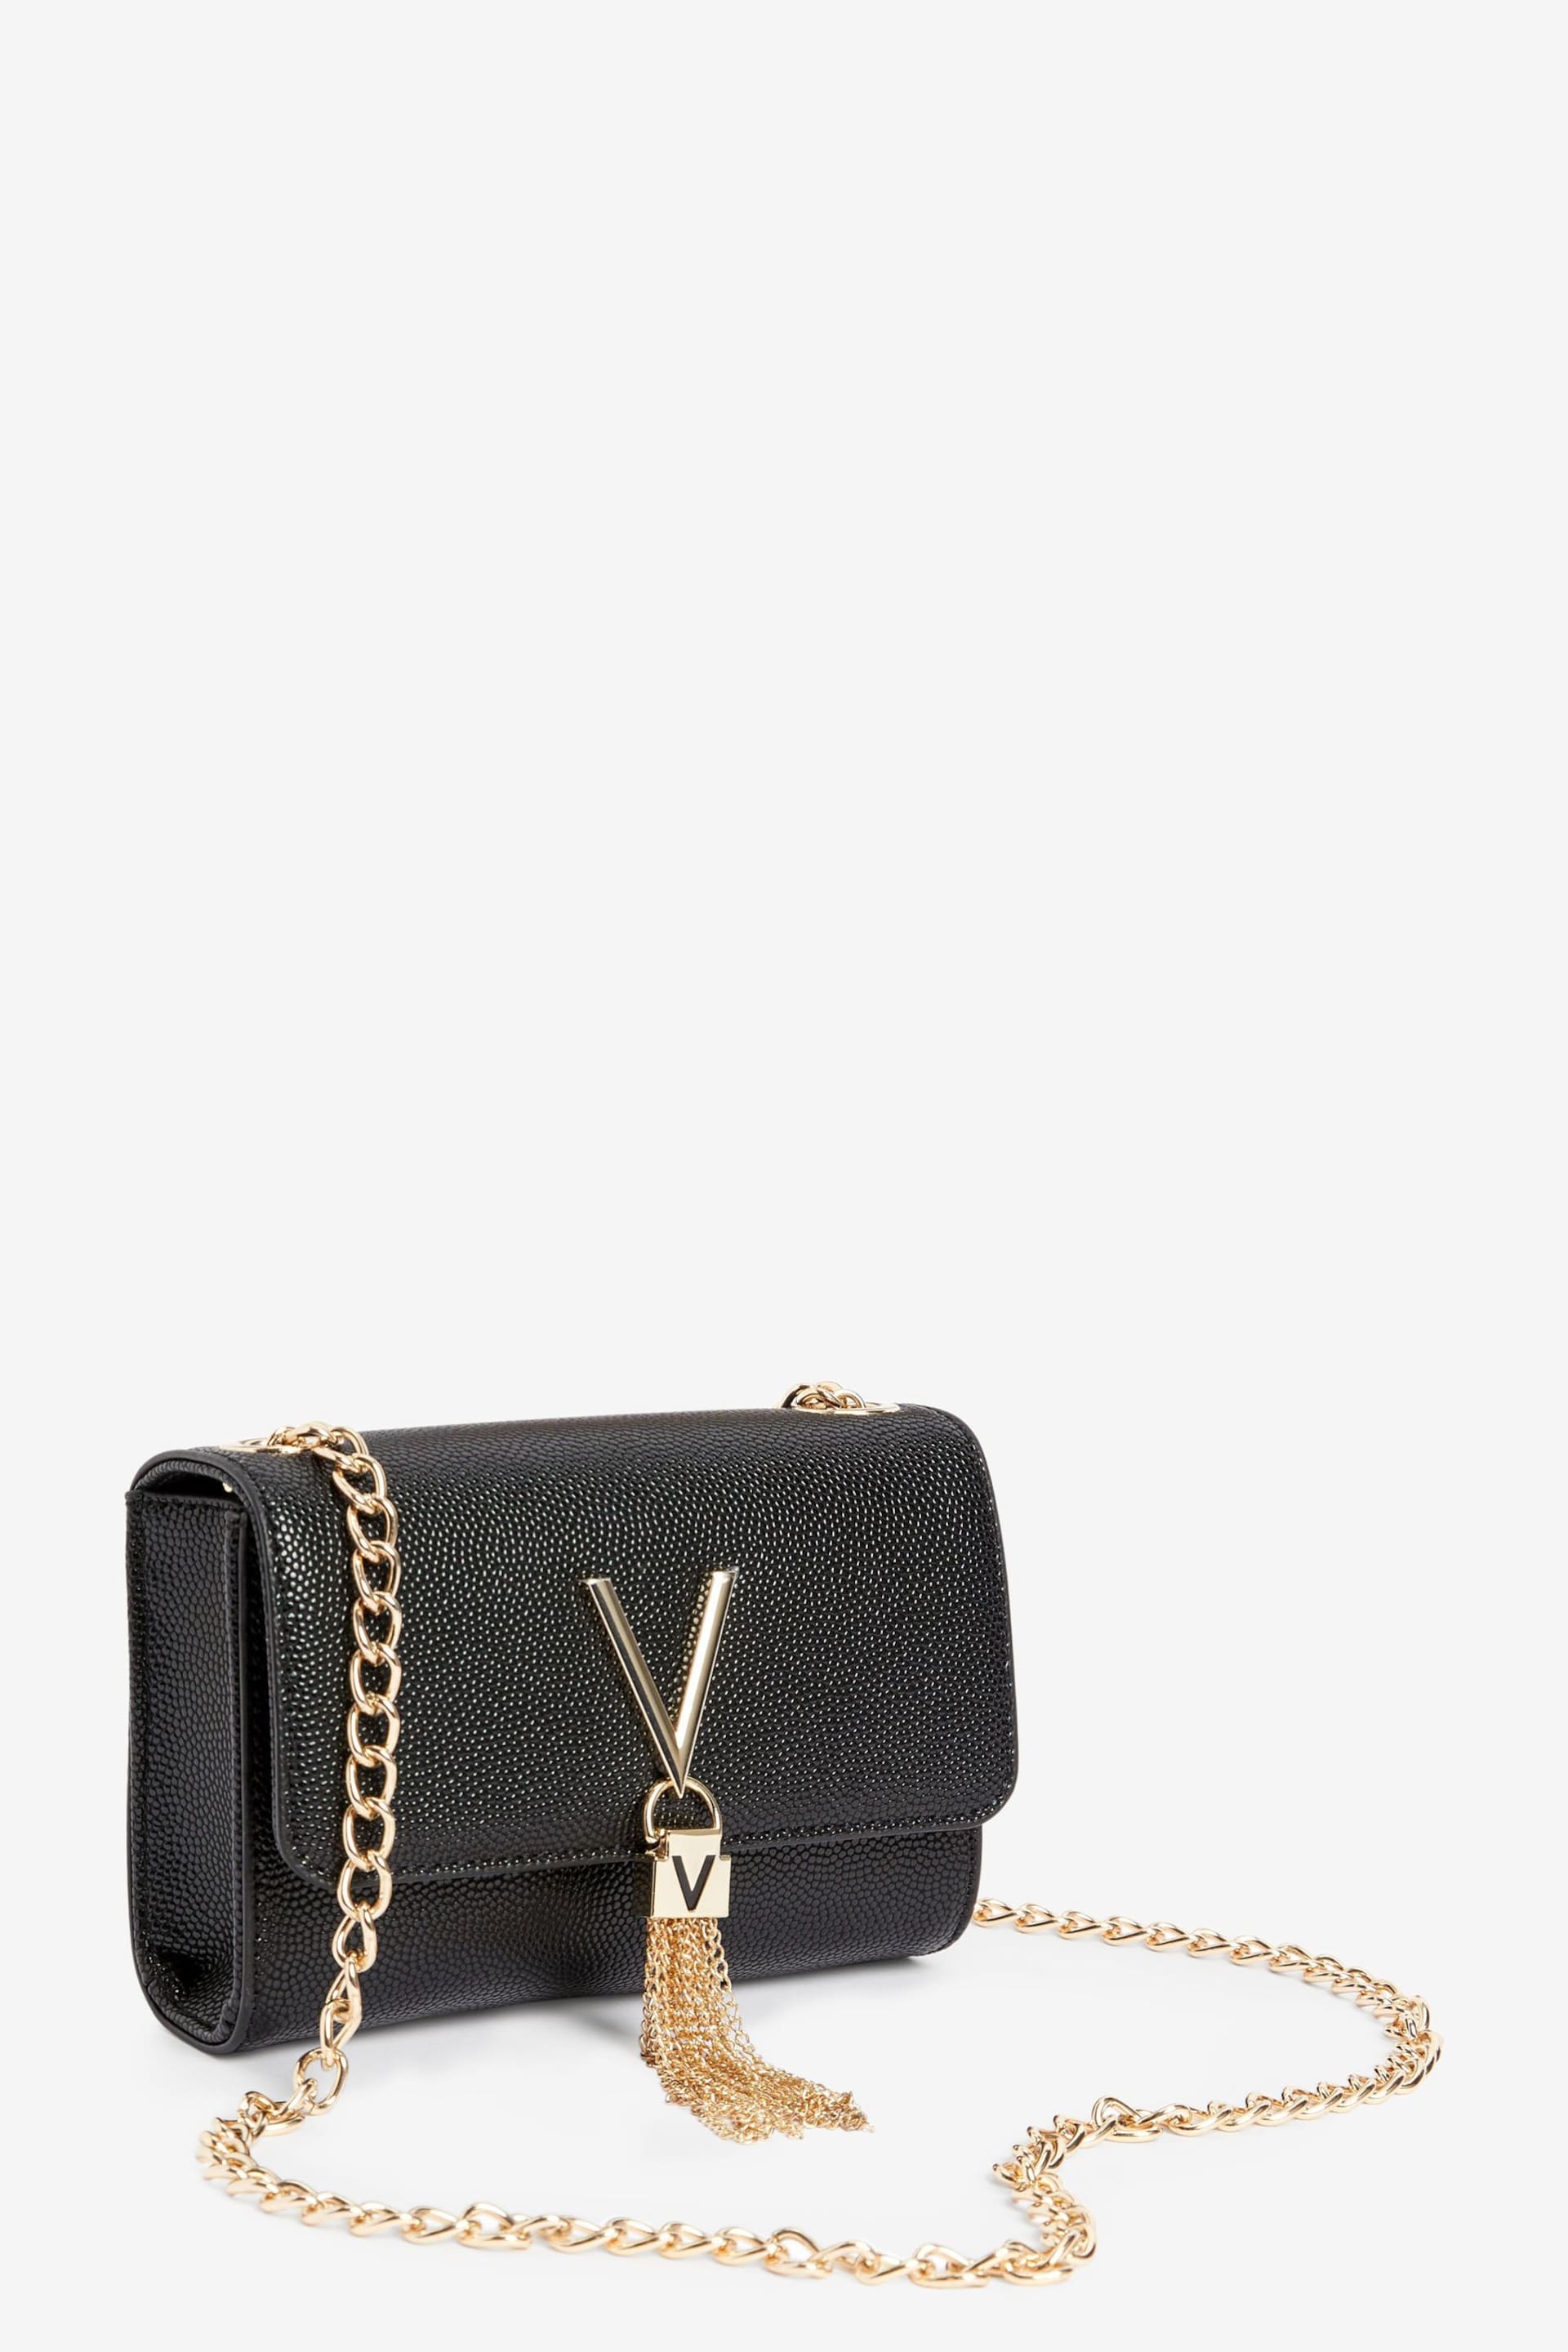 Valentino Bags Black Divina Chain Cross-Body Tassel Bag - Image 1 of 5